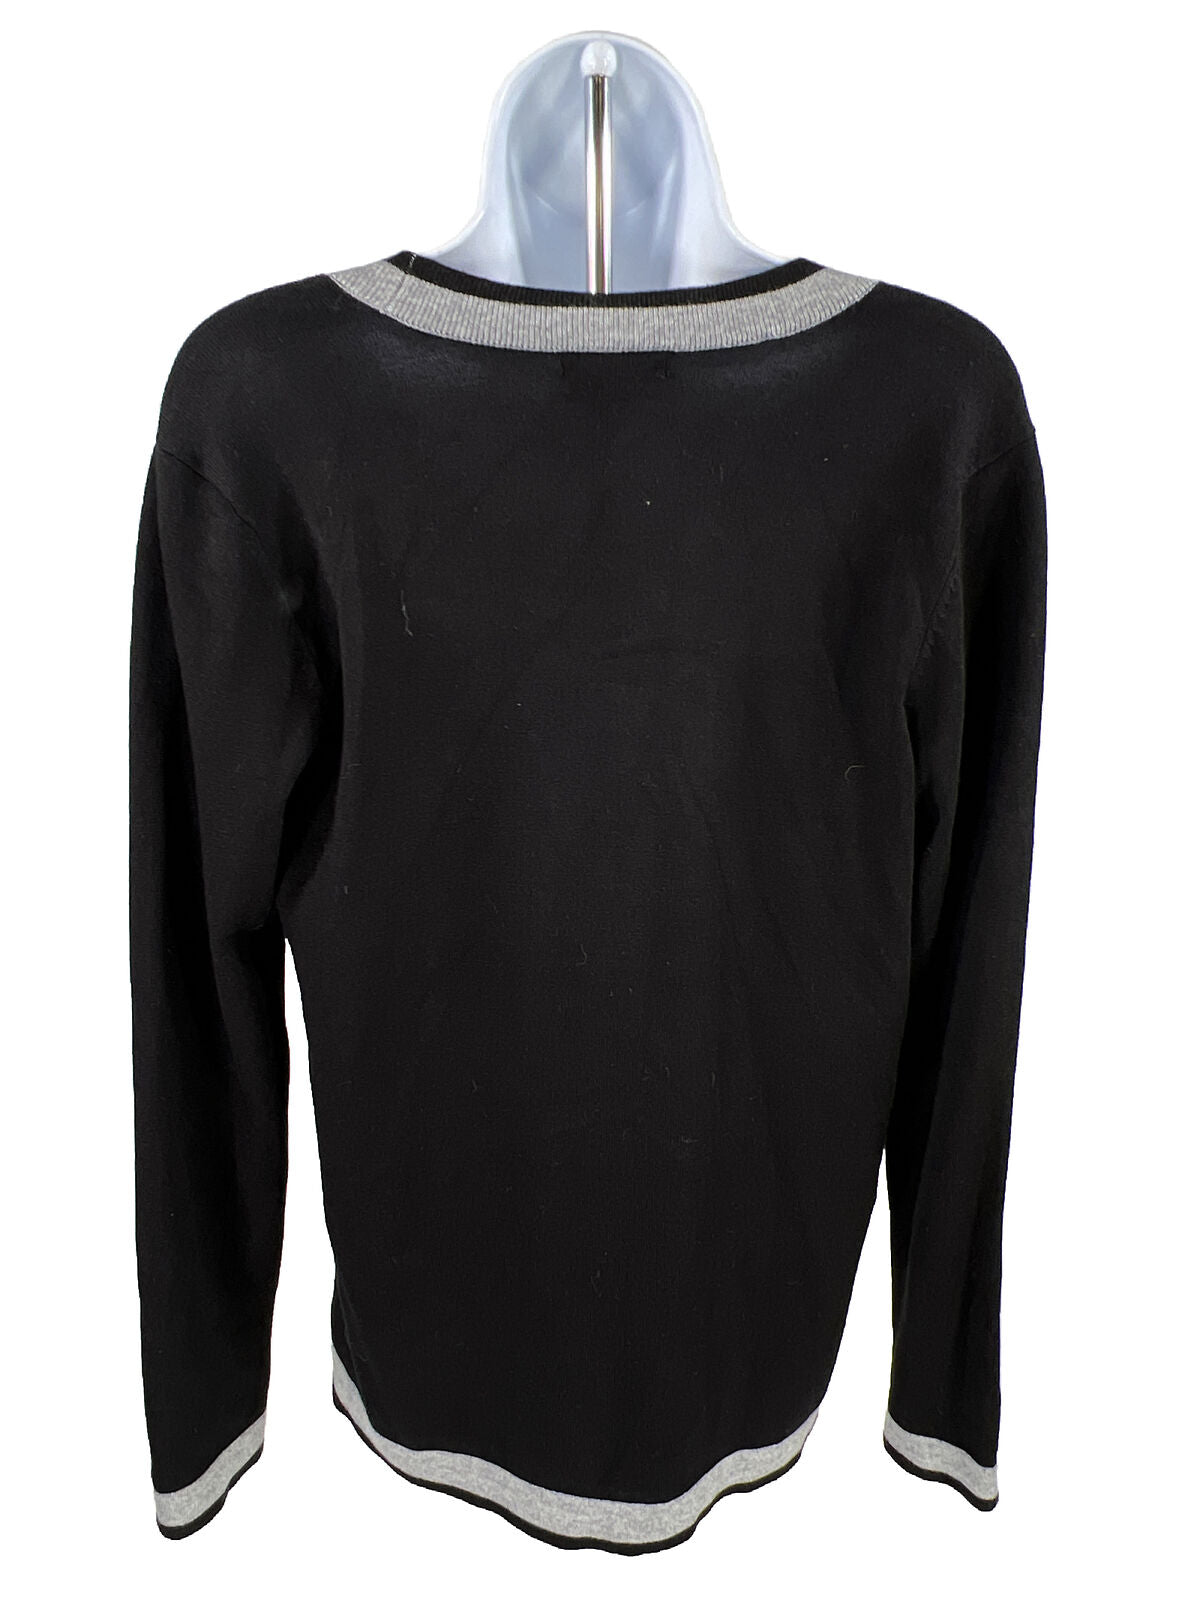 NEW Verve Ami Women's Black Long Sleeve Cardigan Sweater - S